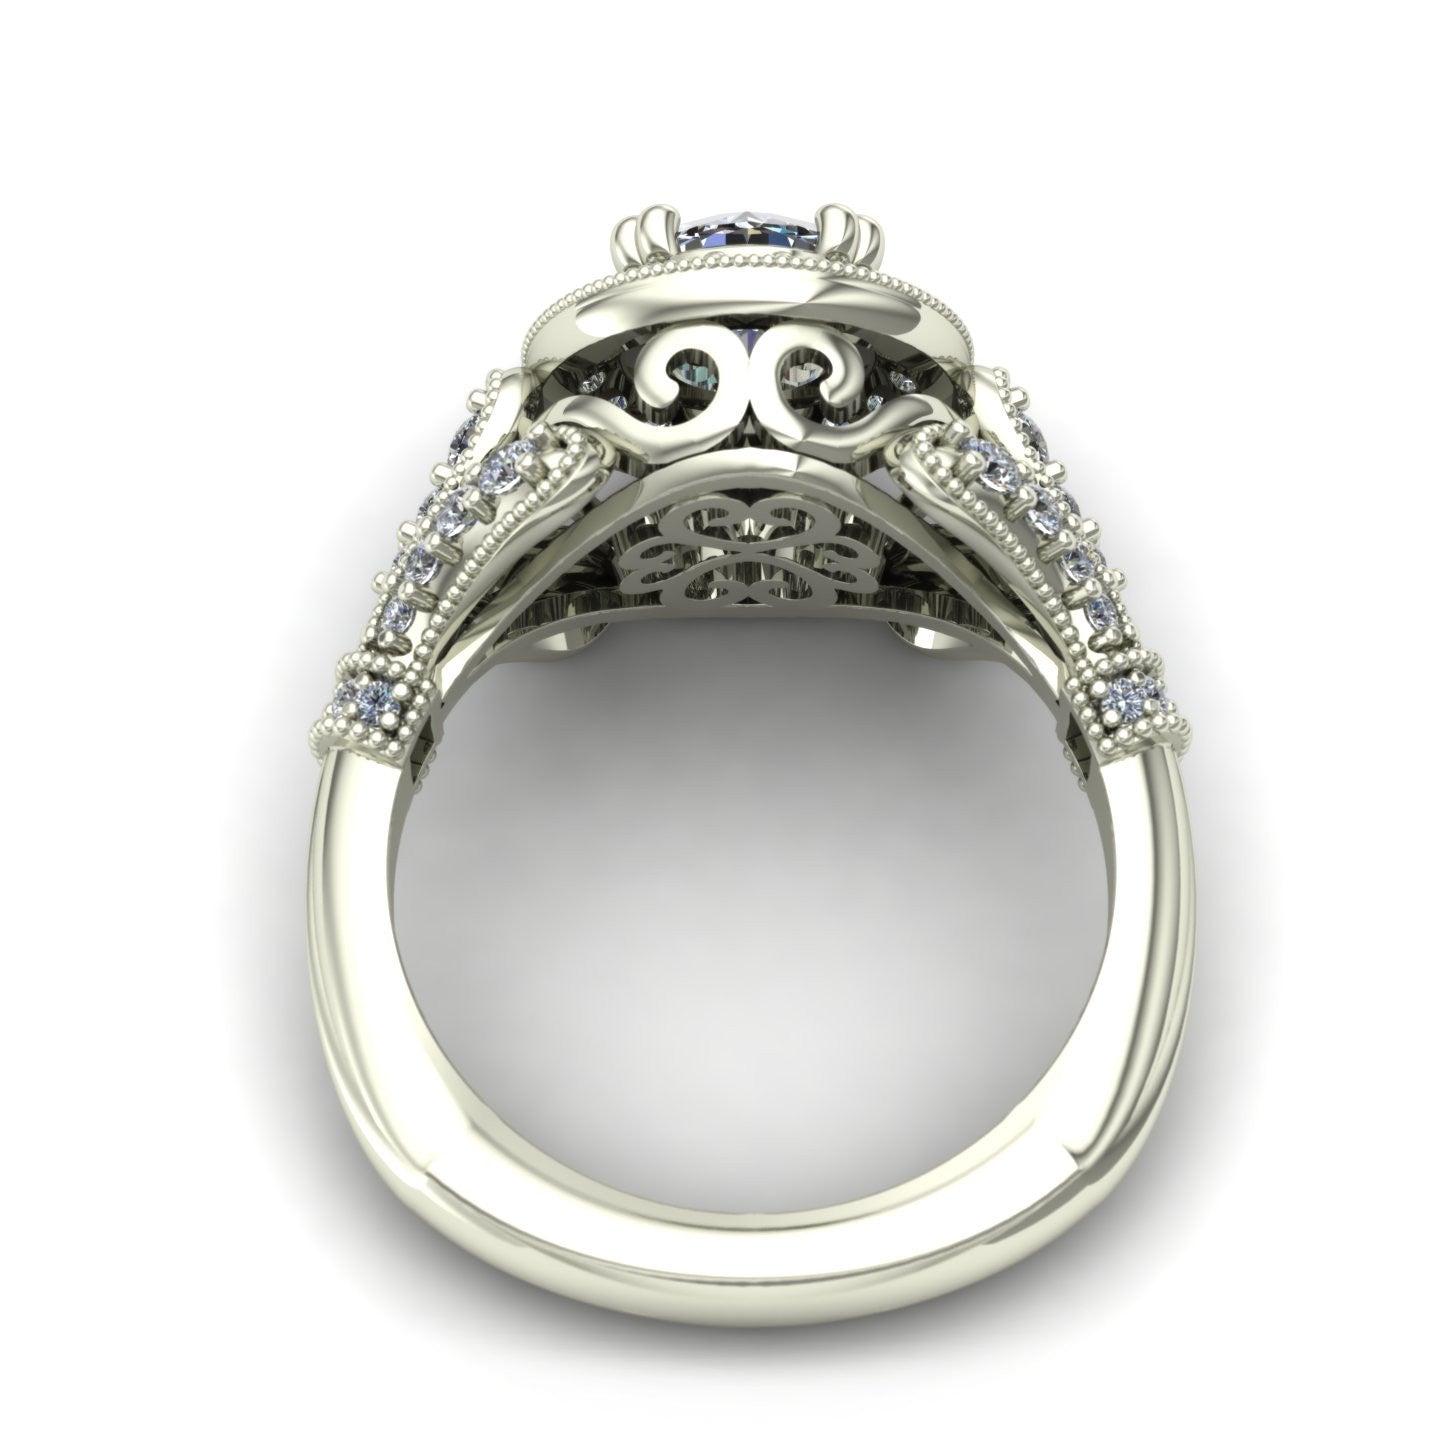 1ct Diamond halo fleur de lis engagement ring in 18k white gold - Charles Babb Designs - through finger view